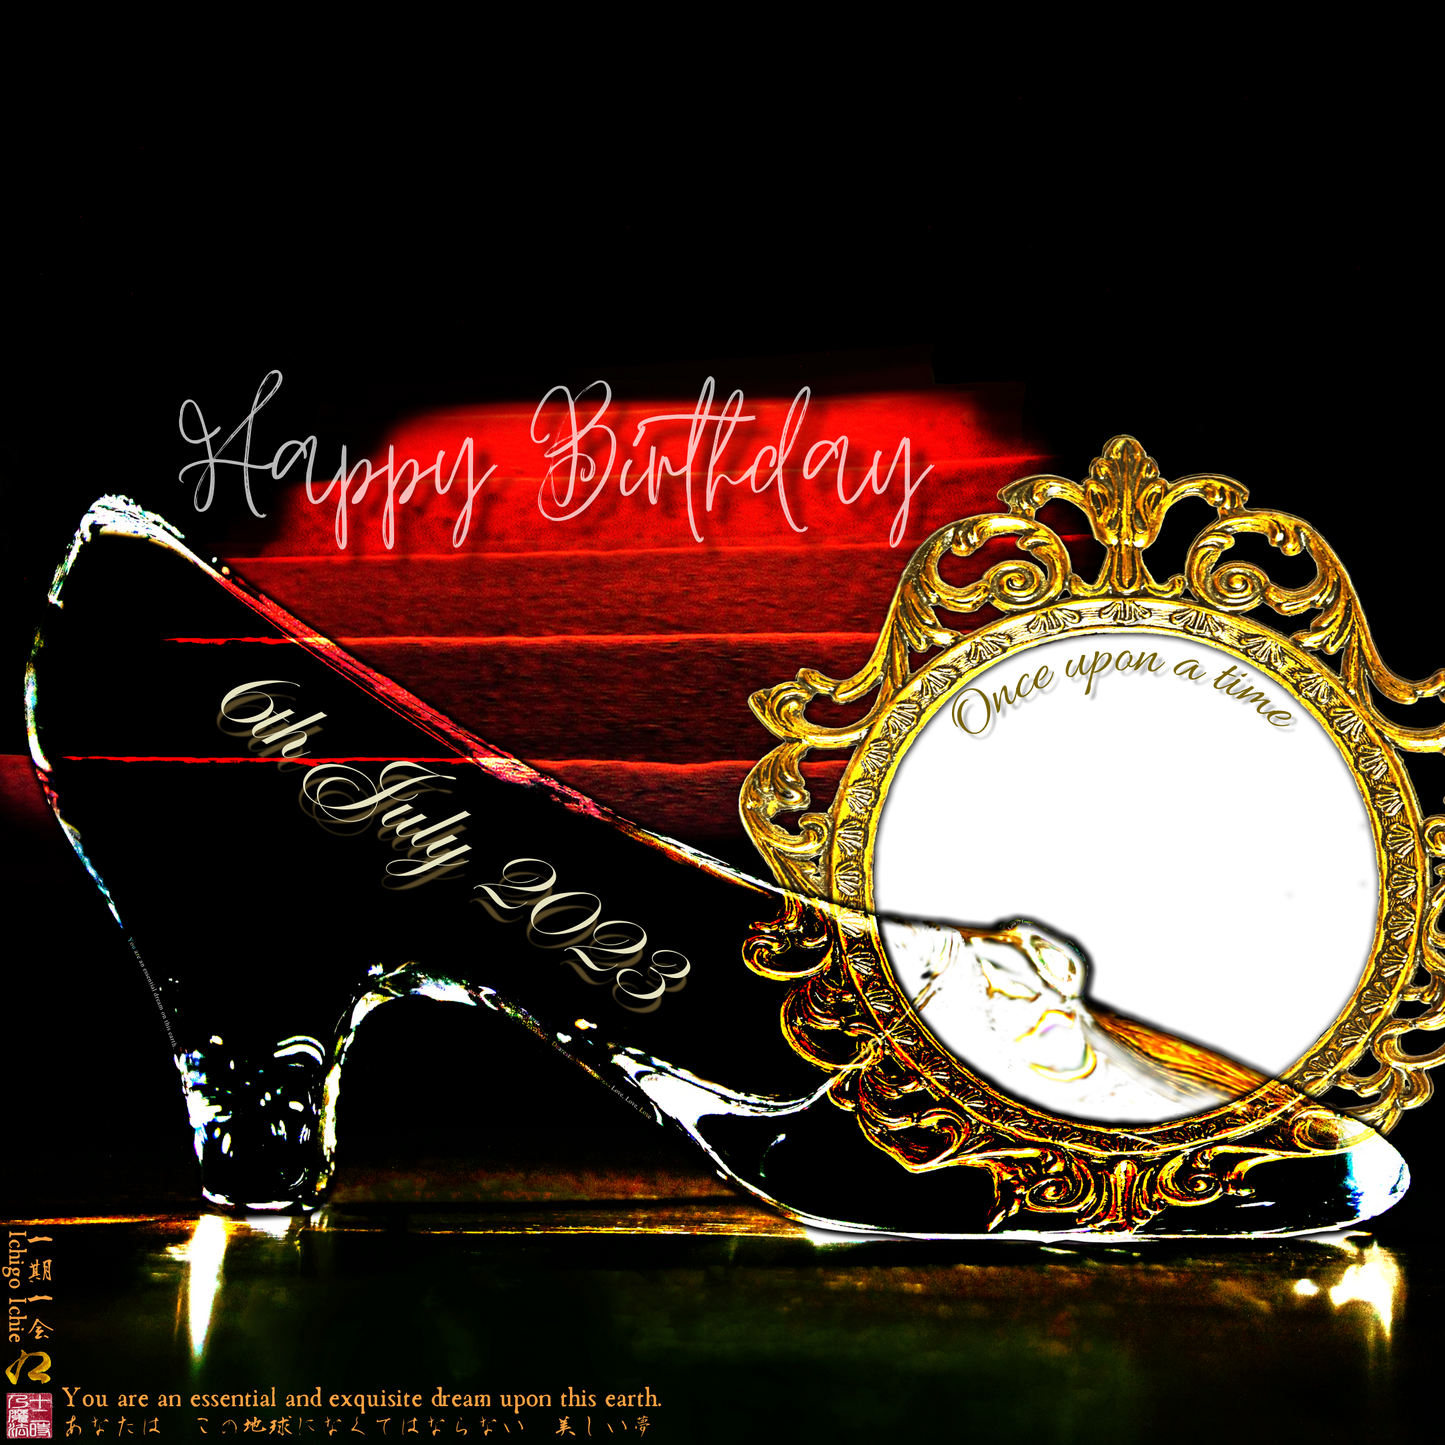 Happy Birthday Glass Slipper "Ichigo Ichie" 6th July 2023 the Right (1-of-1) NFT Art